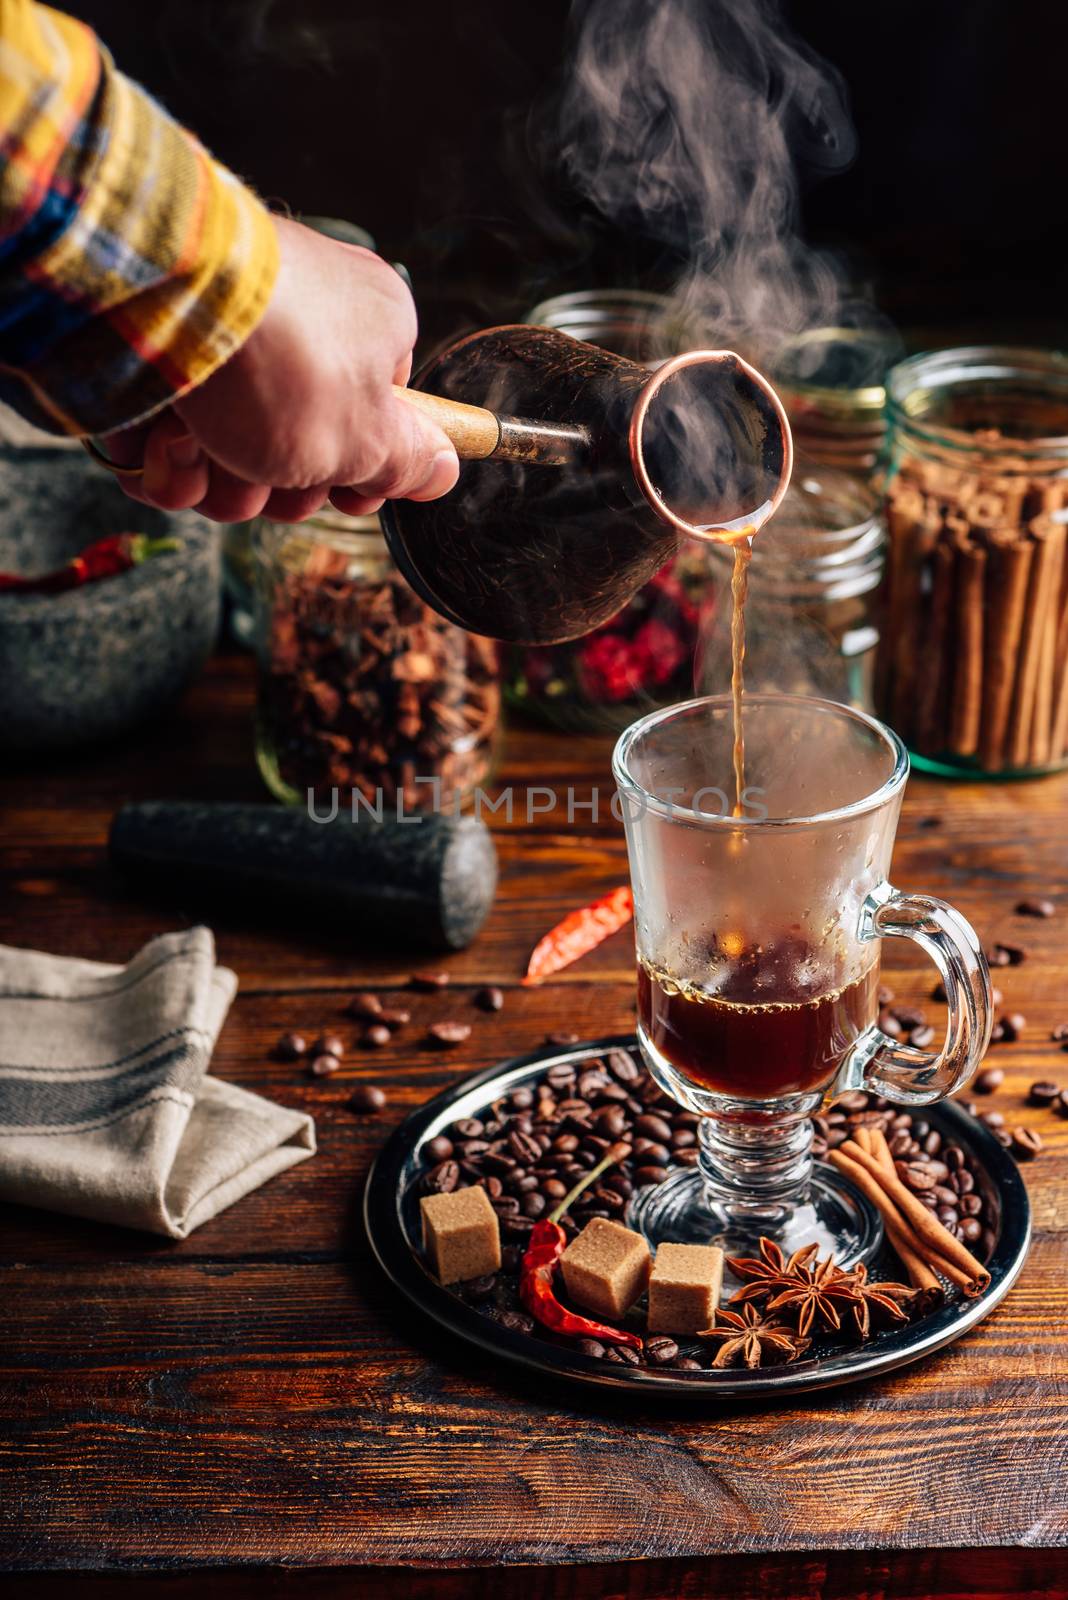 Man Pour Coffee in Mug. by Seva_blsv